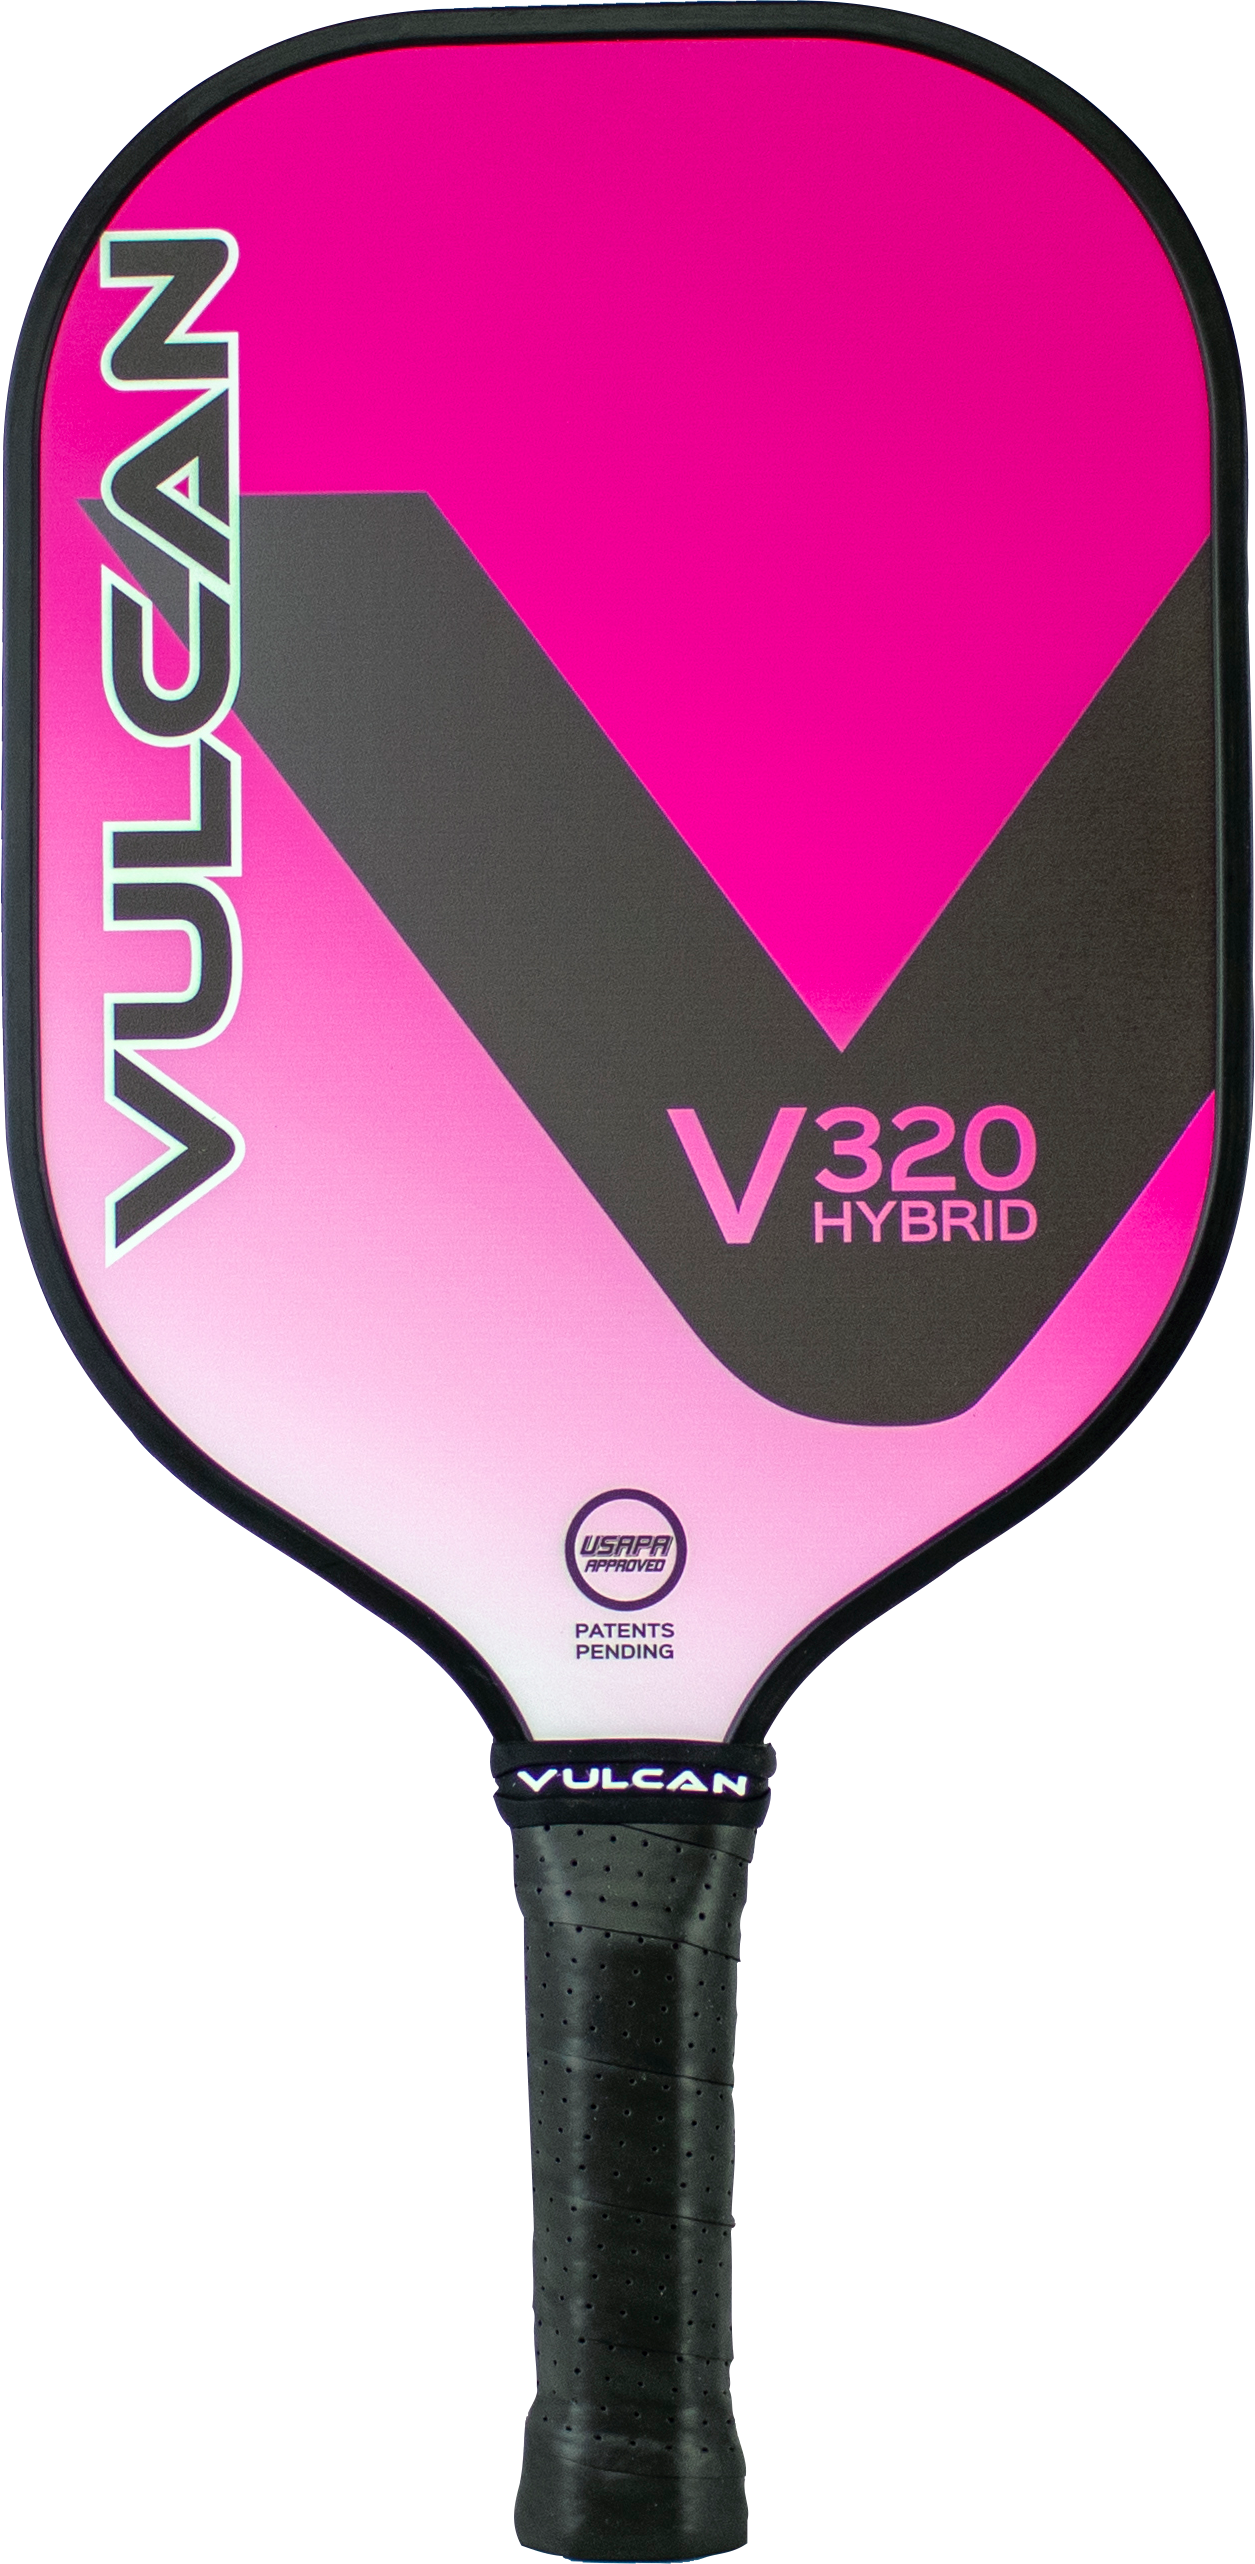 The Vulcan V320 Pickleball Paddle is a hybrid pickleball paddle offered by the brand Vulcan.